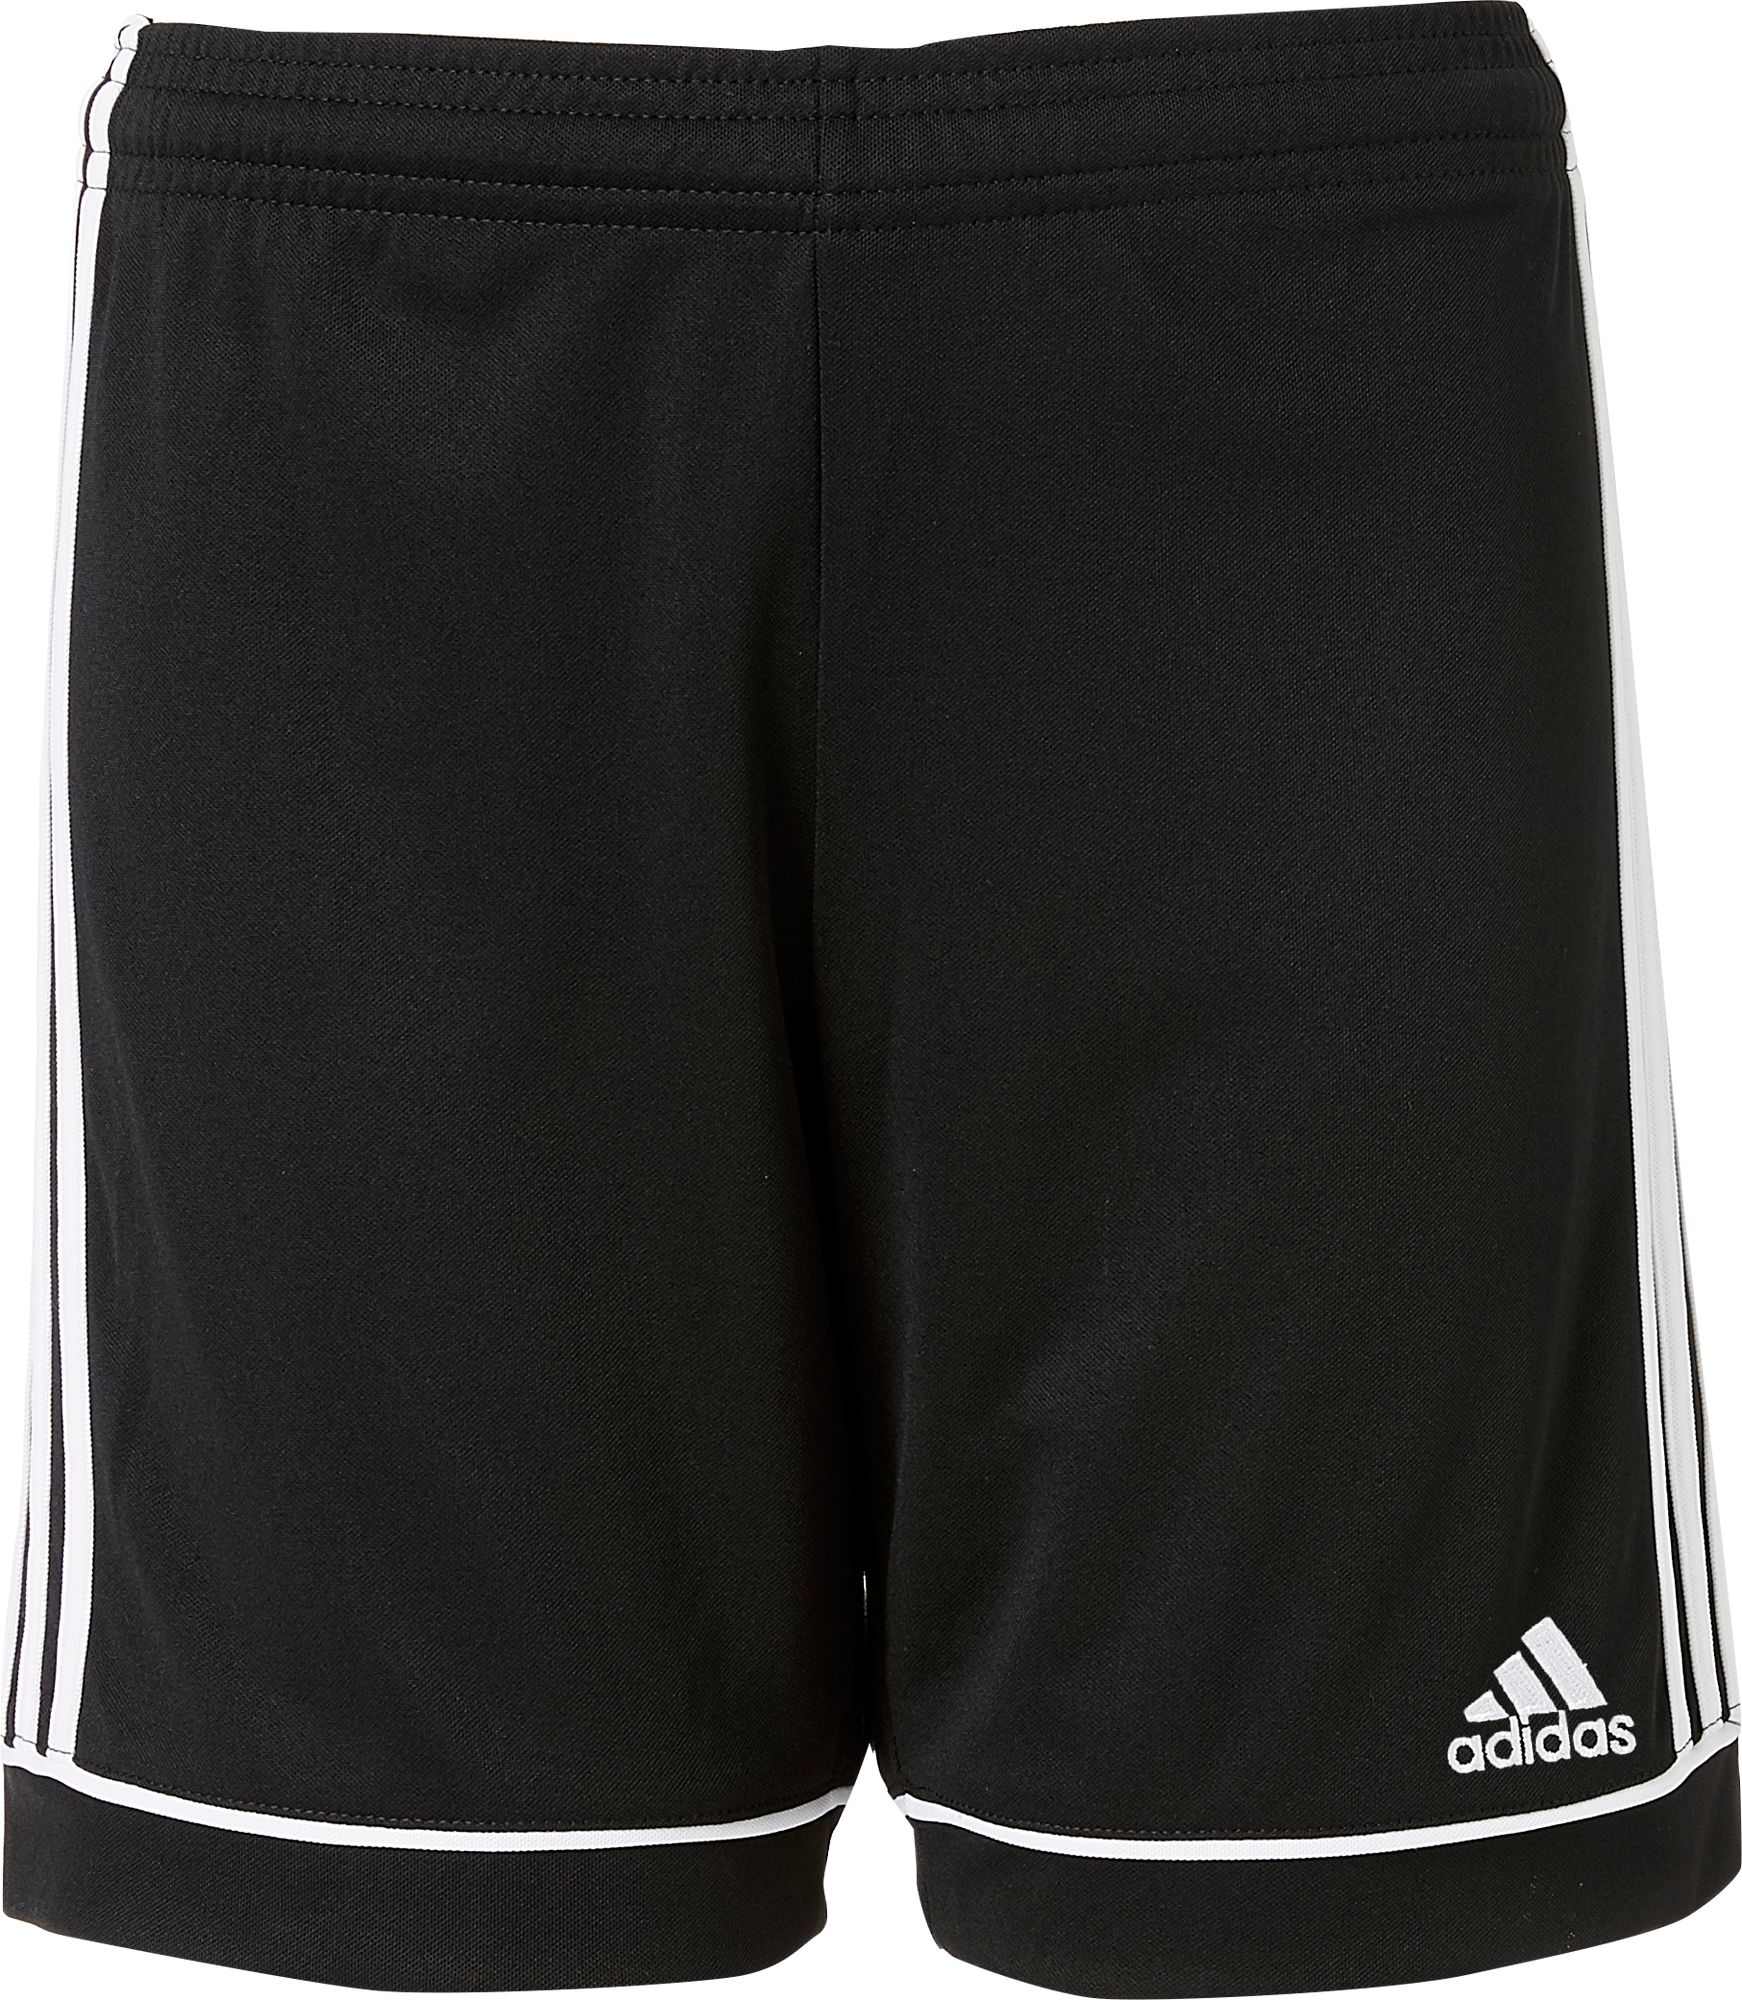 An overview of soccer shorts – fashionarrow.com